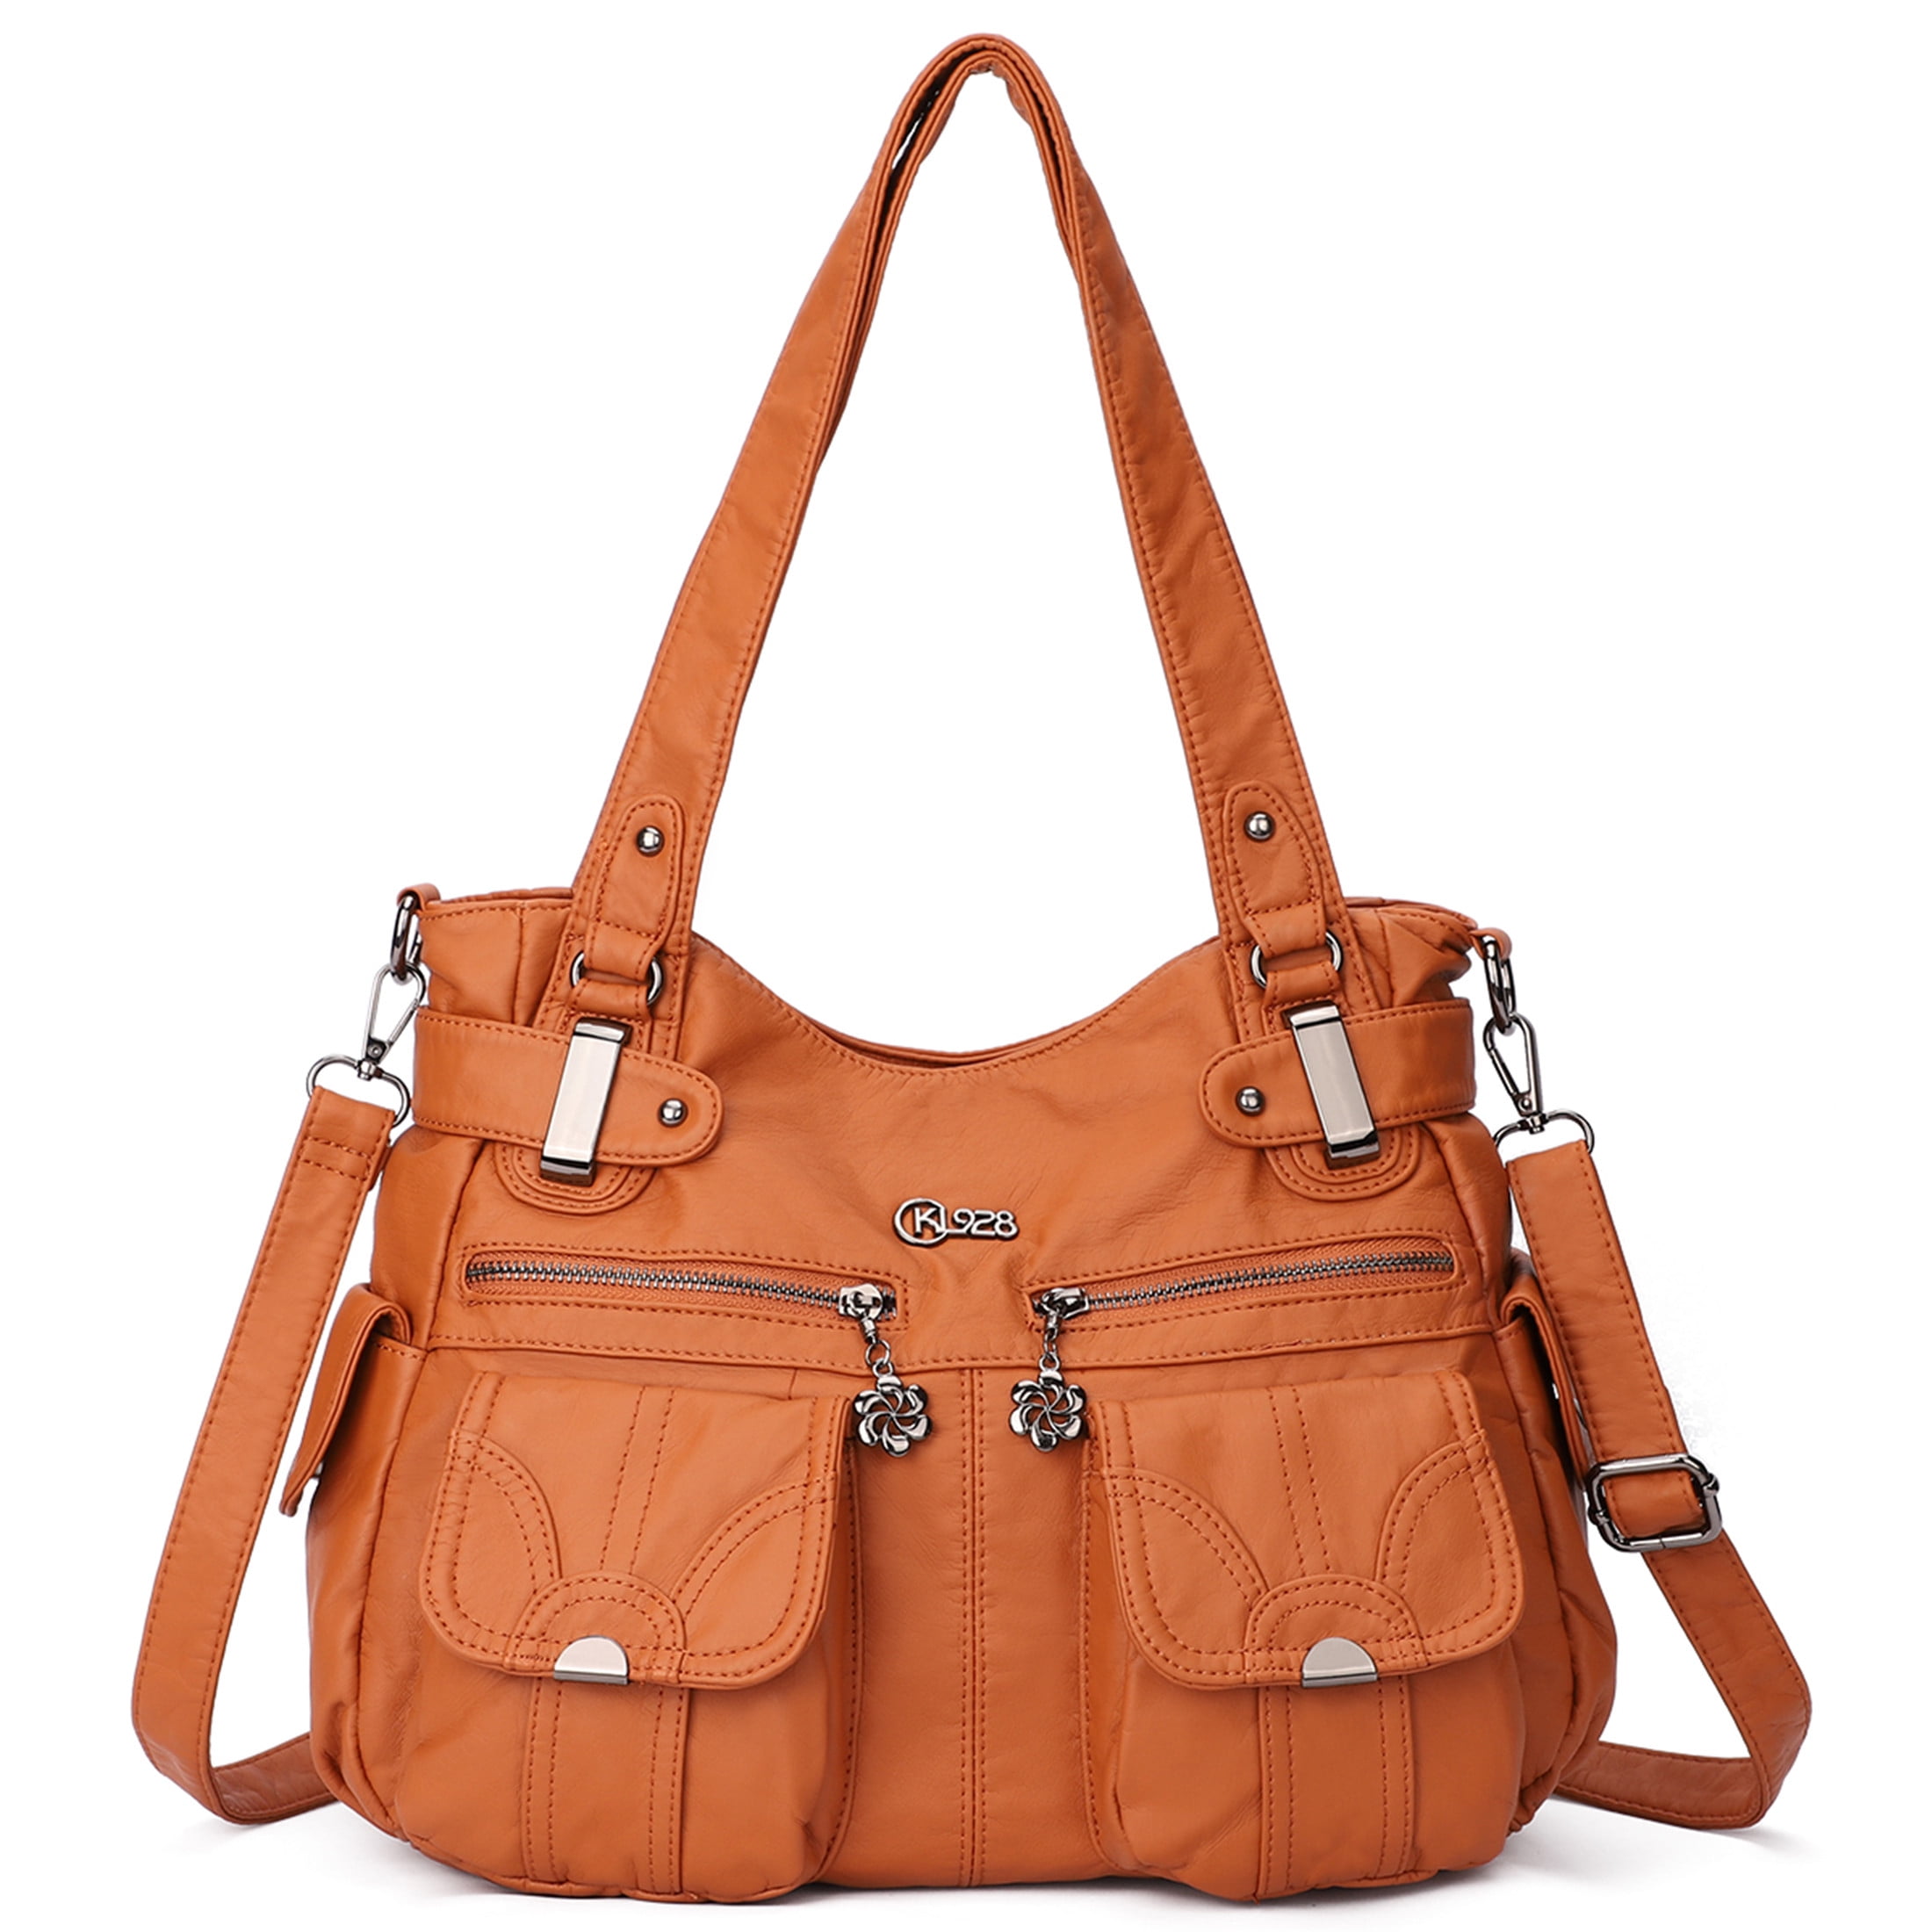 KL928 Purses and Handbags for Women Multi Pocket Tote Bag Hobo ...